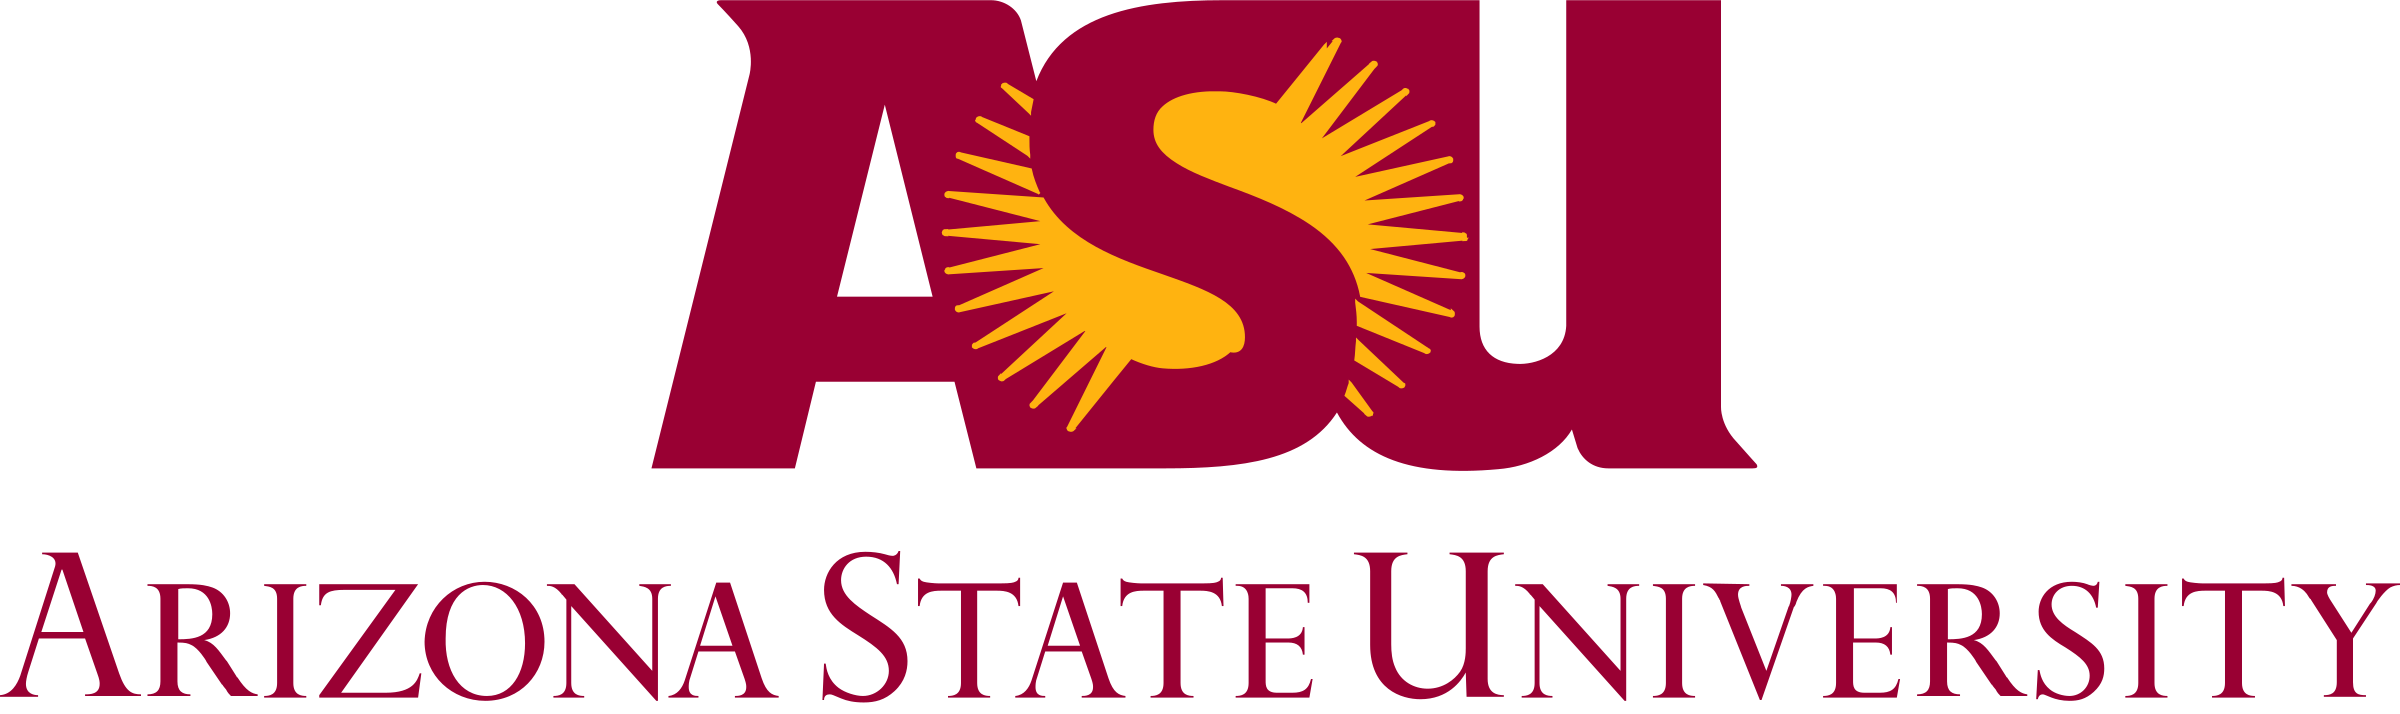 arizona-state-university-logo-png-transparent.png